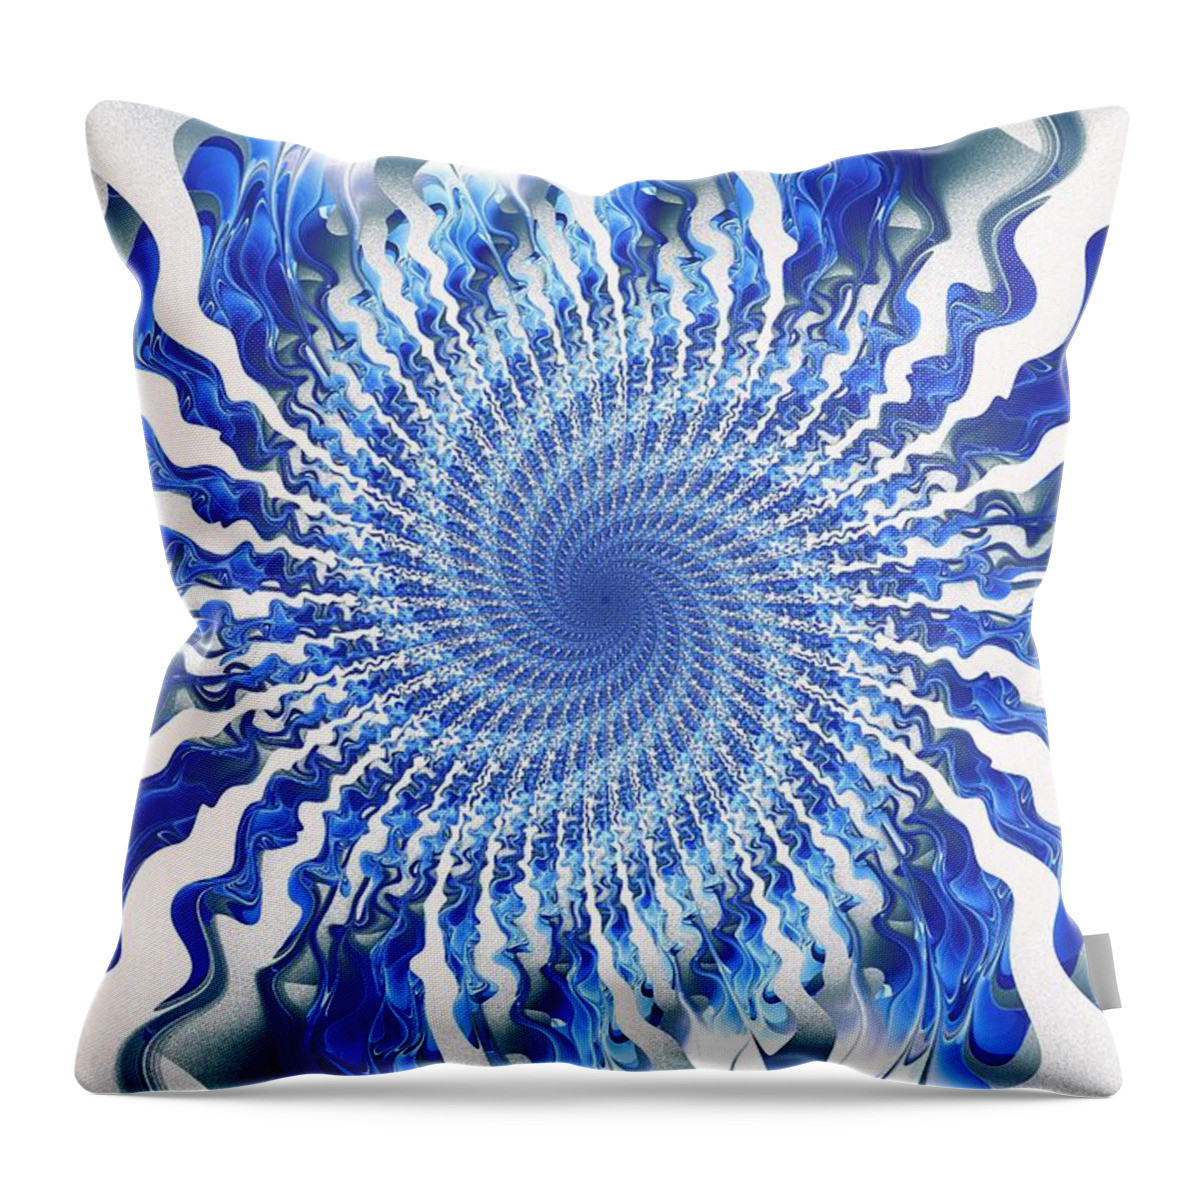 Focal Throw Pillow featuring the digital art Blue Focal Point by Anastasiya Malakhova